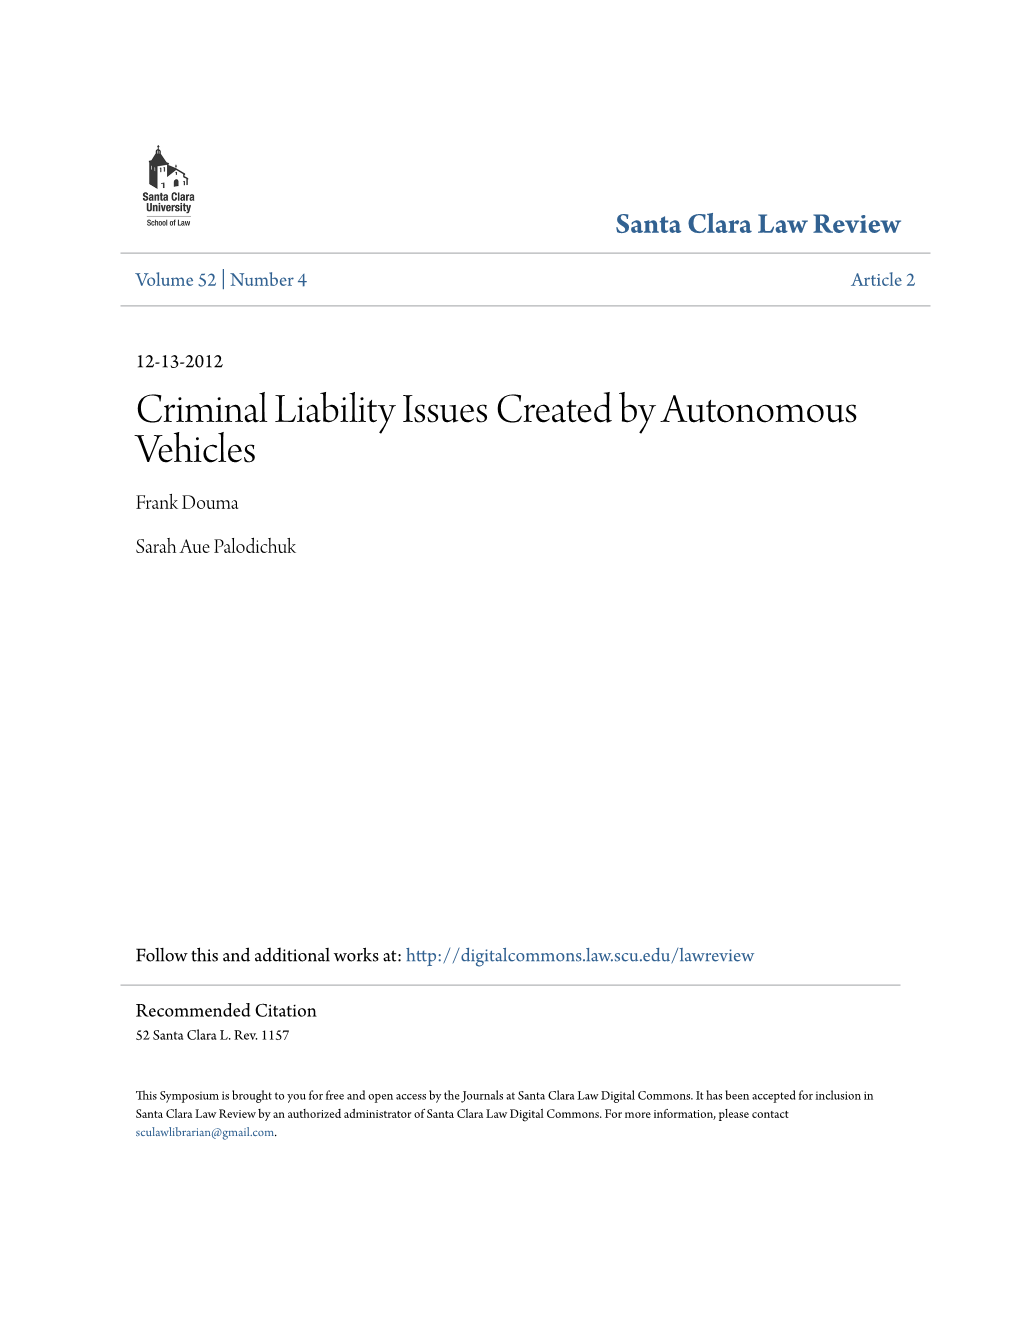 Criminal Liability Issues Created by Autonomous Vehicles Frank Douma